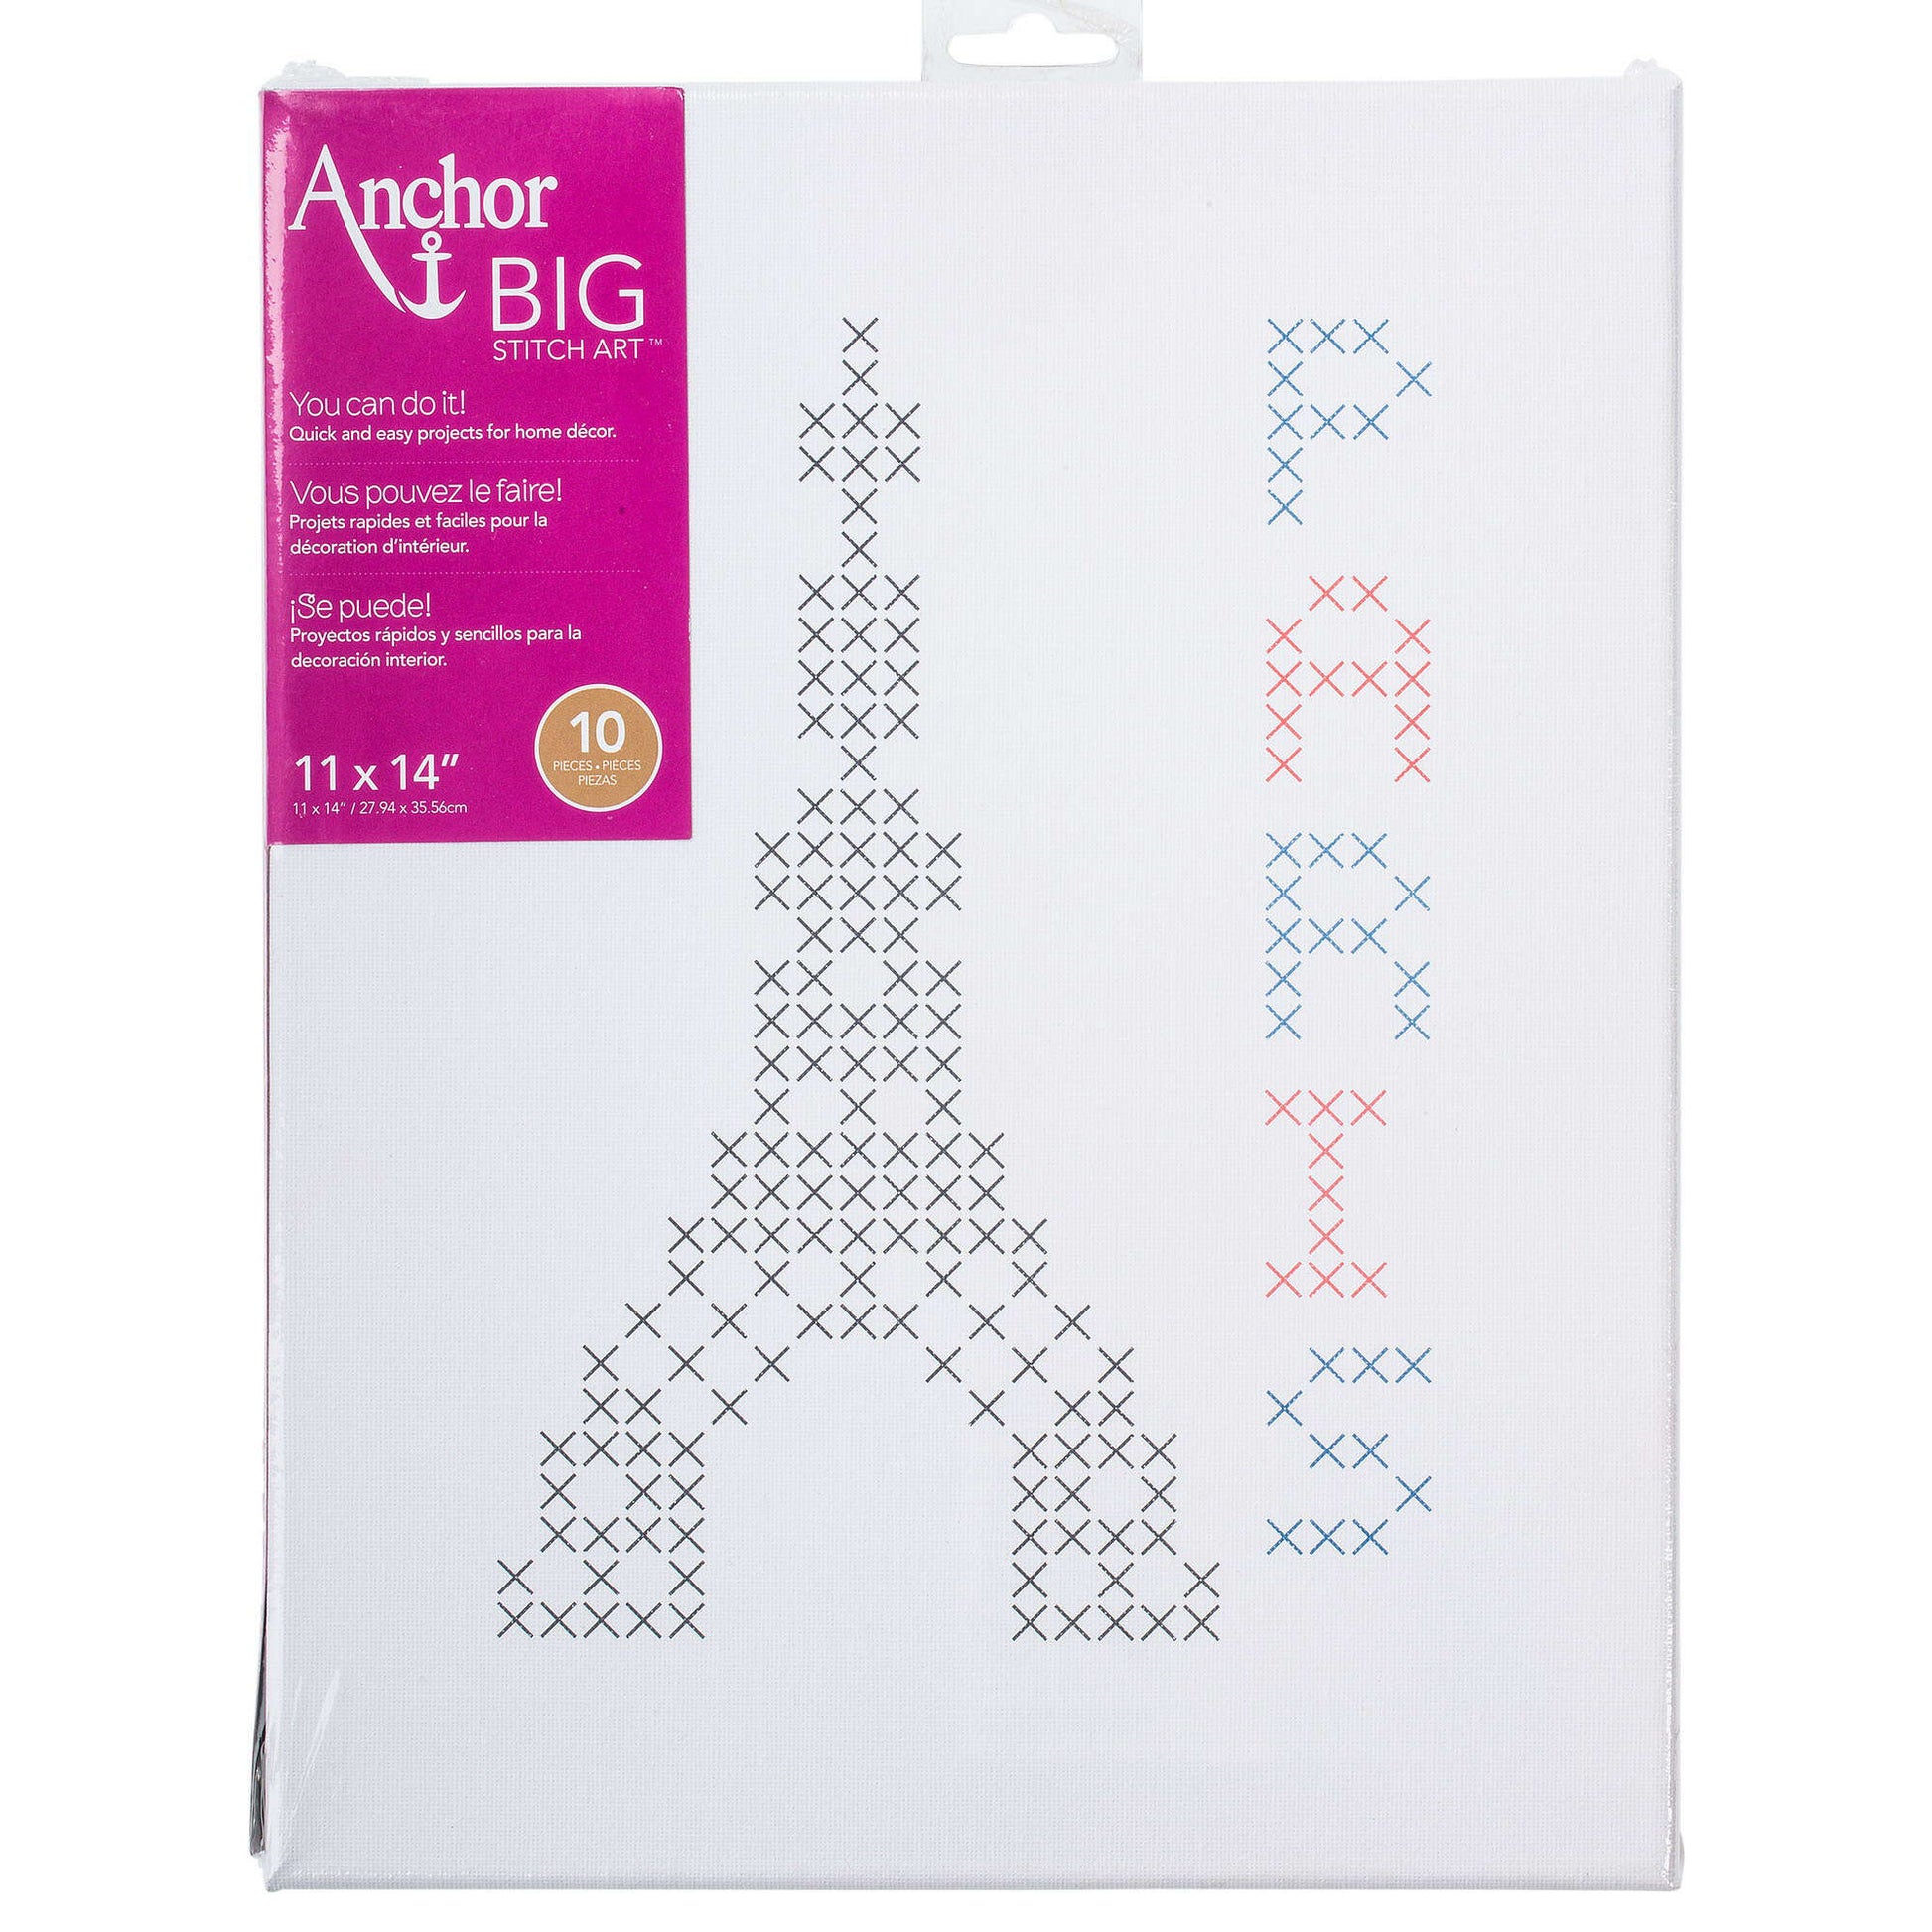 Anchor Big Stitch Art 11" x 14" - Clearance Items*